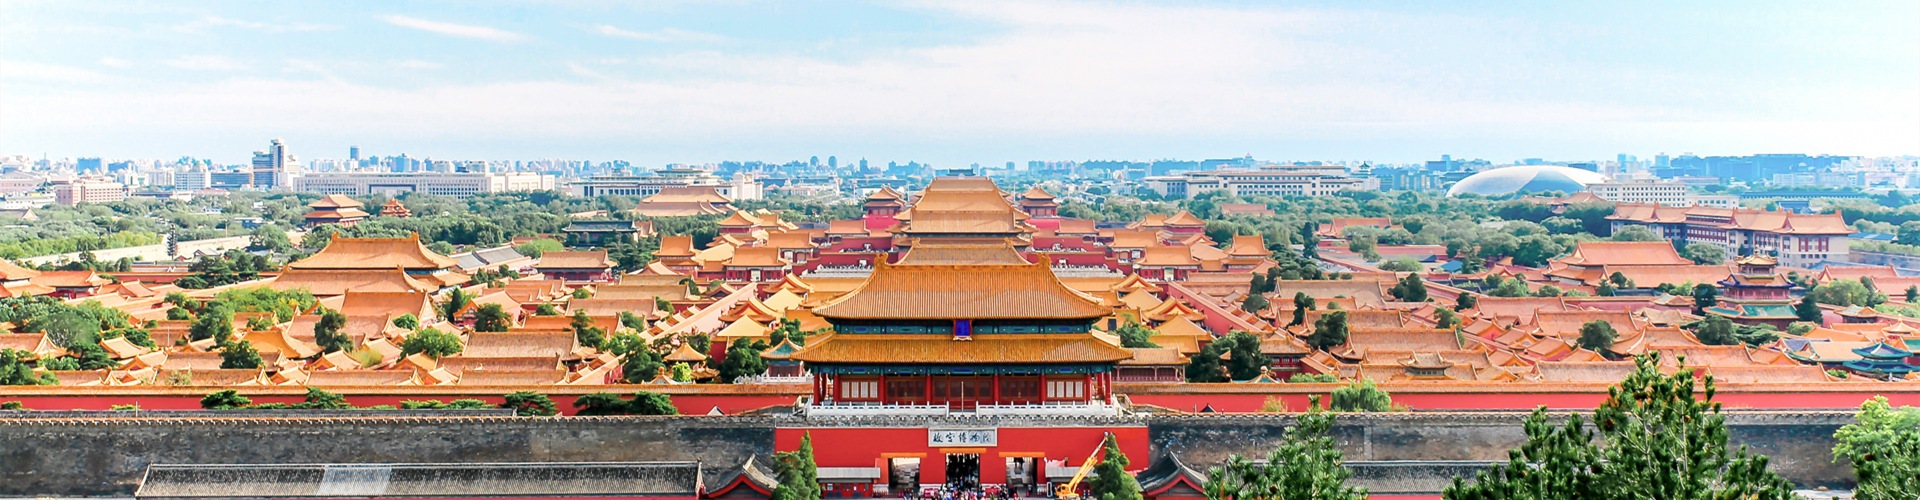 Jingshan Park, Beijing - Overlook the Panorama  of the Forbidden City